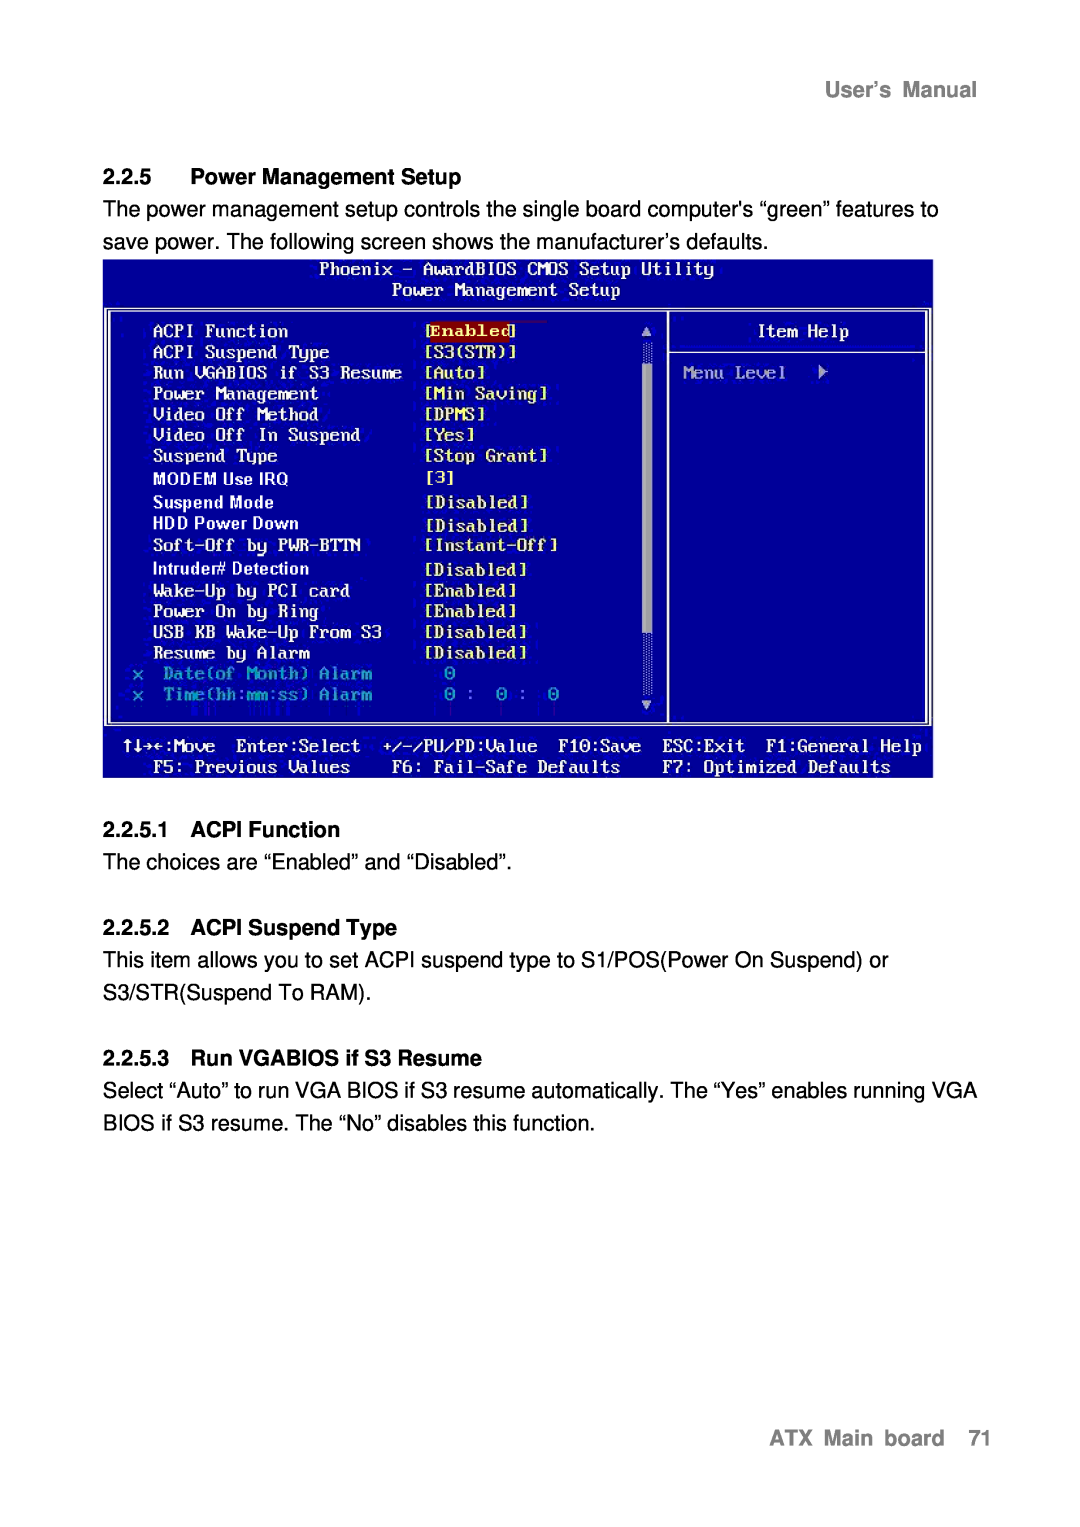 Intel AX965Q user manual Power Management Setup, ACPI Function, ACPI Suspend Type, Run VGABIOS if S3 Resume, User’s Manual 